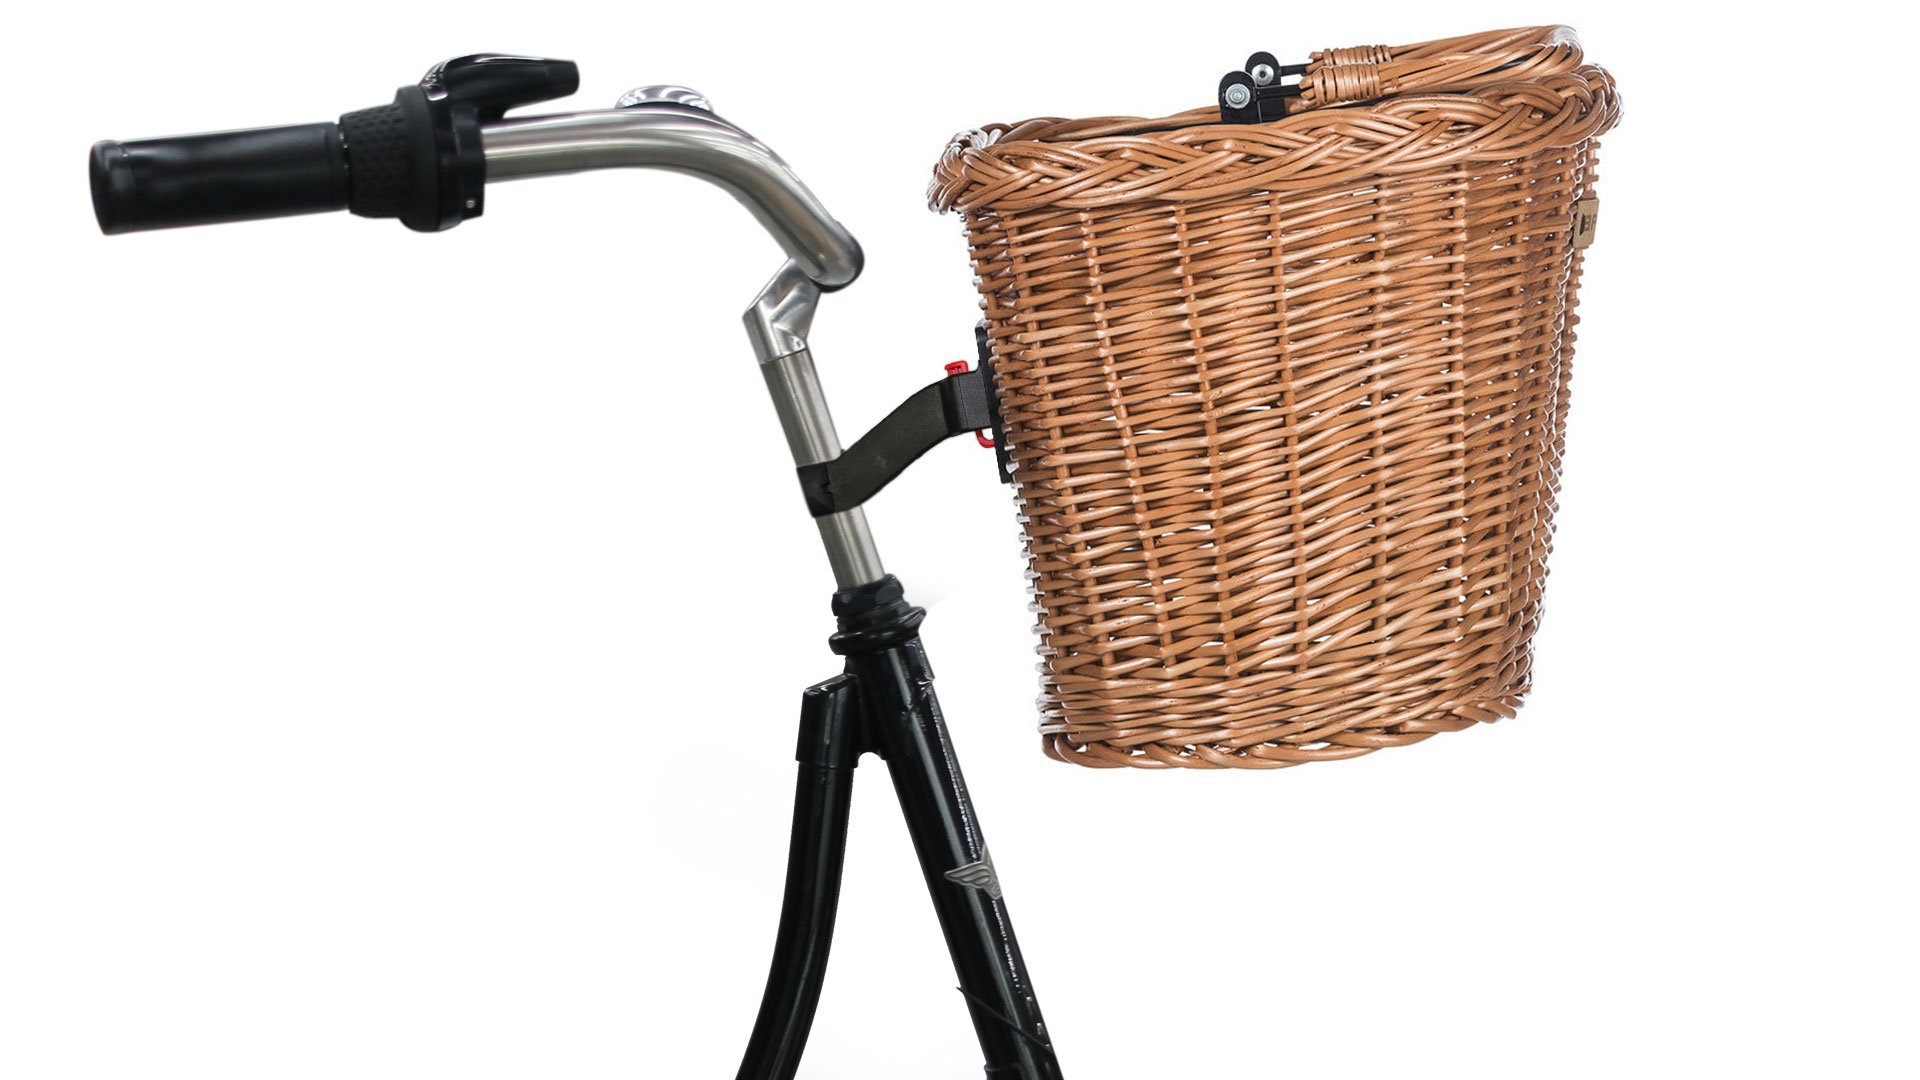 Panier vélo hollandais Basil avant amovible en osier avec fixation